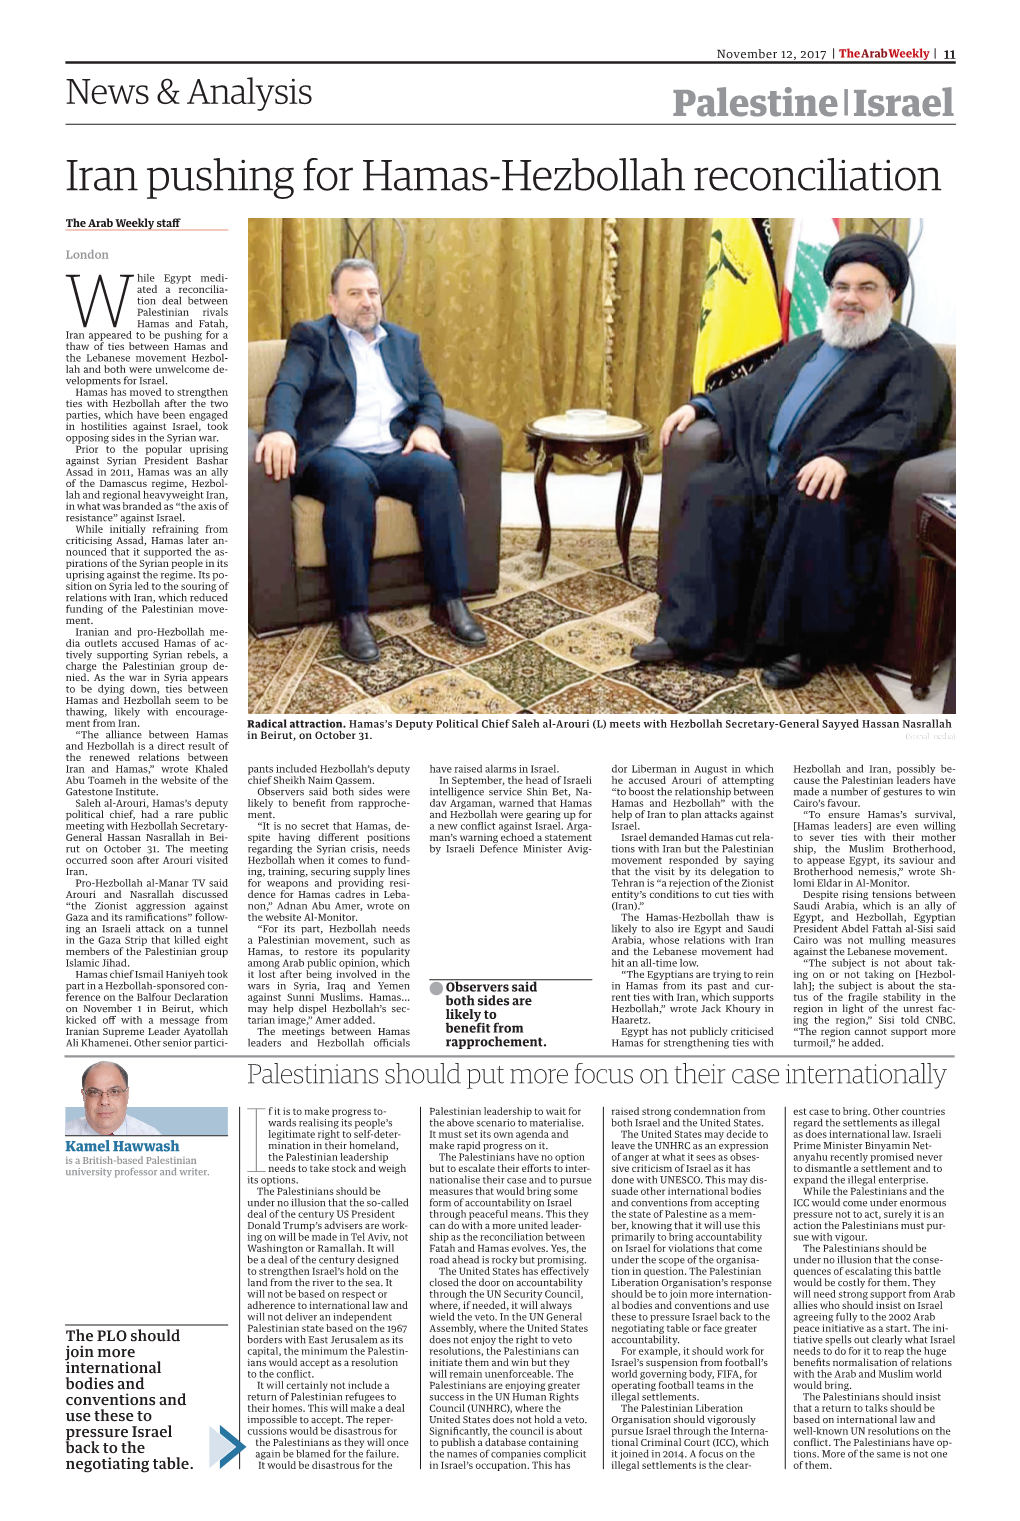 Iran Pushing for Hamas-Hezbollah Reconciliation